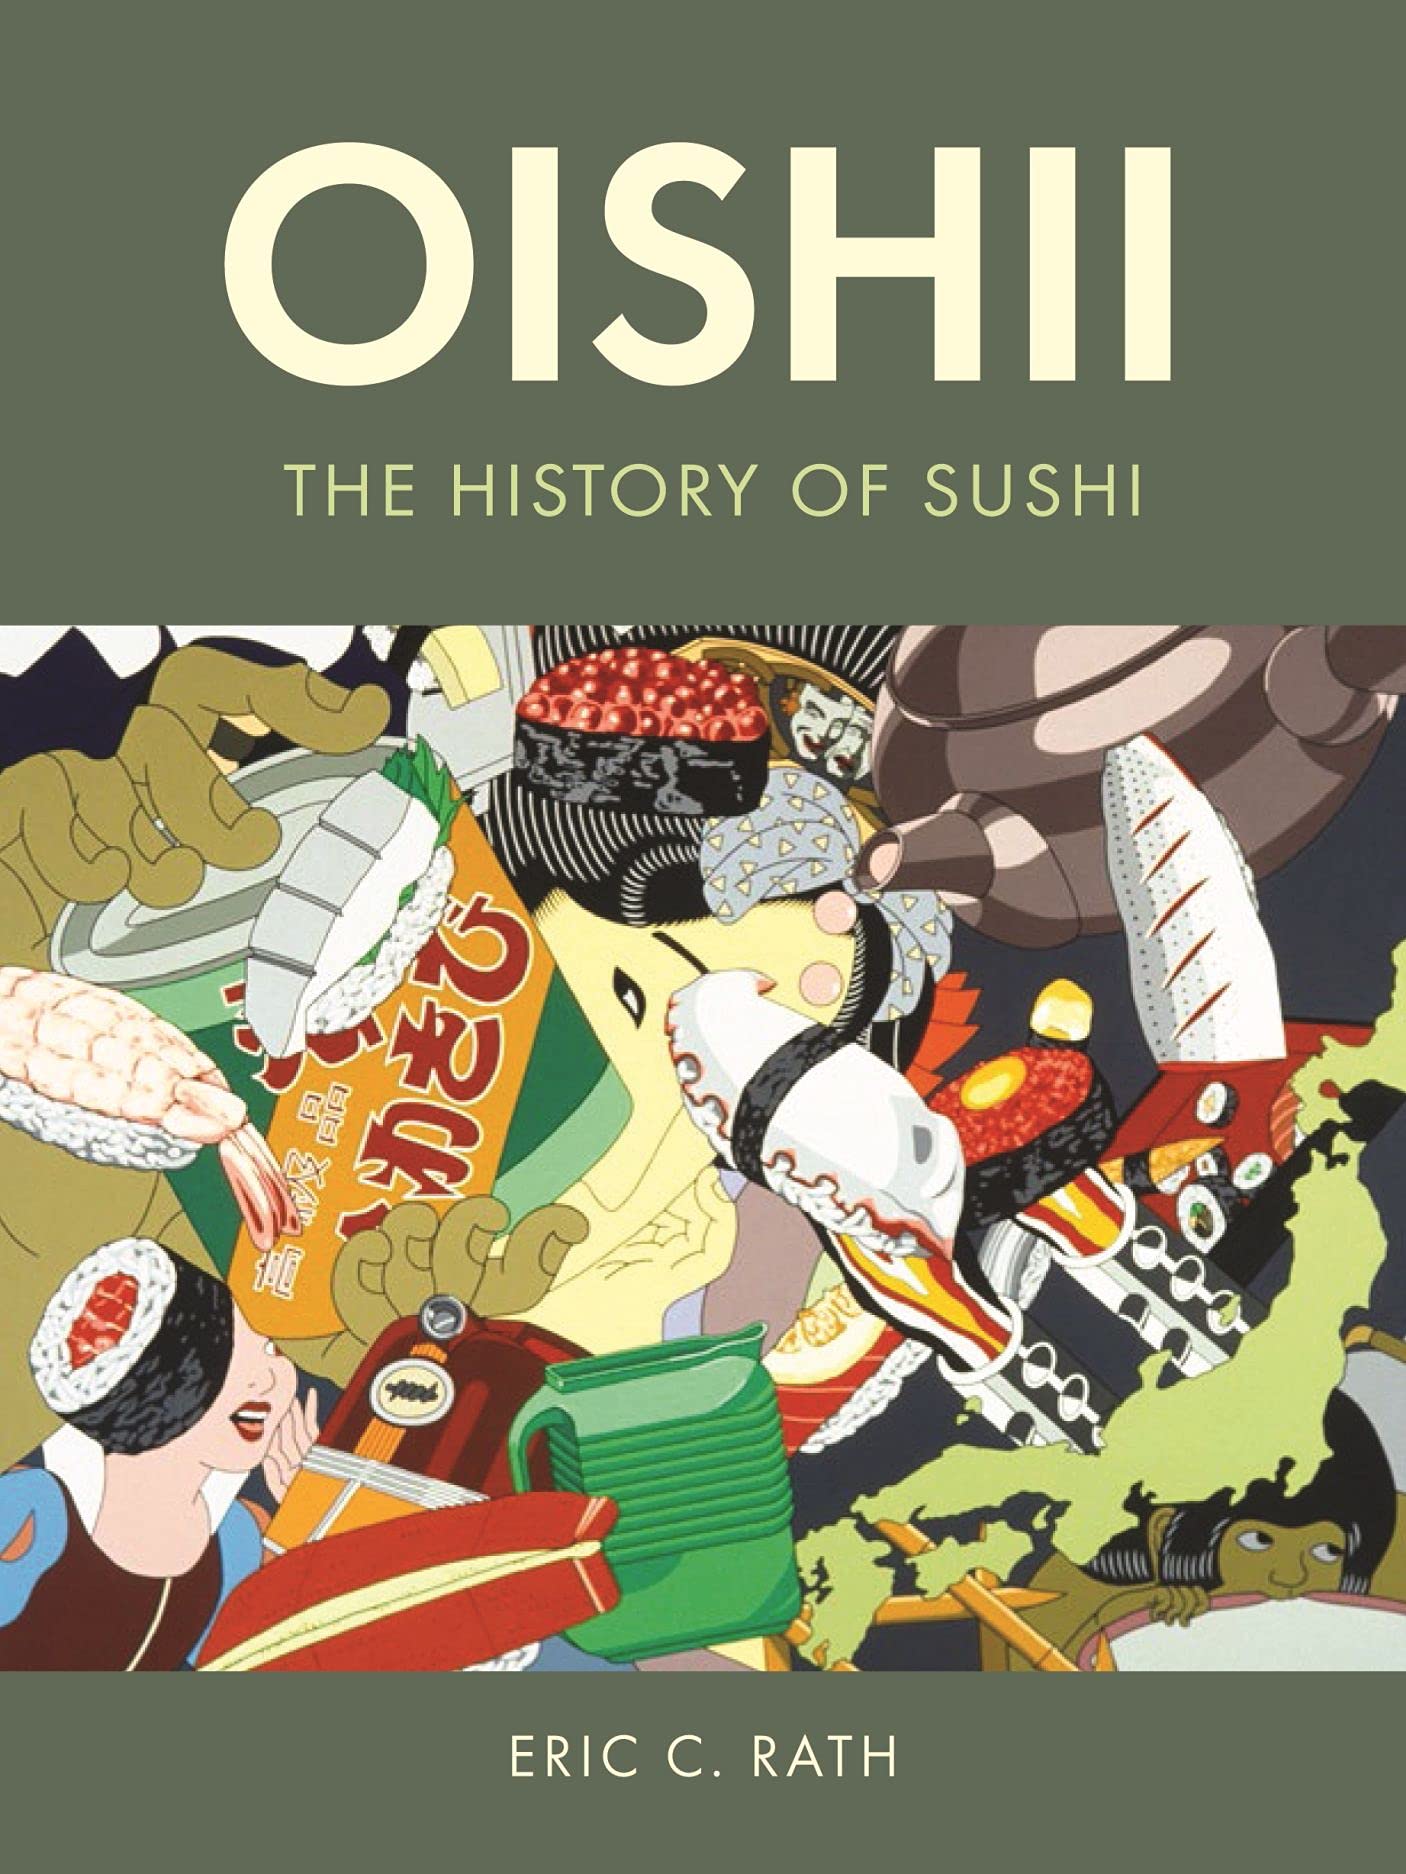 Oishii: The History of Sushi (Eric C. Rath)